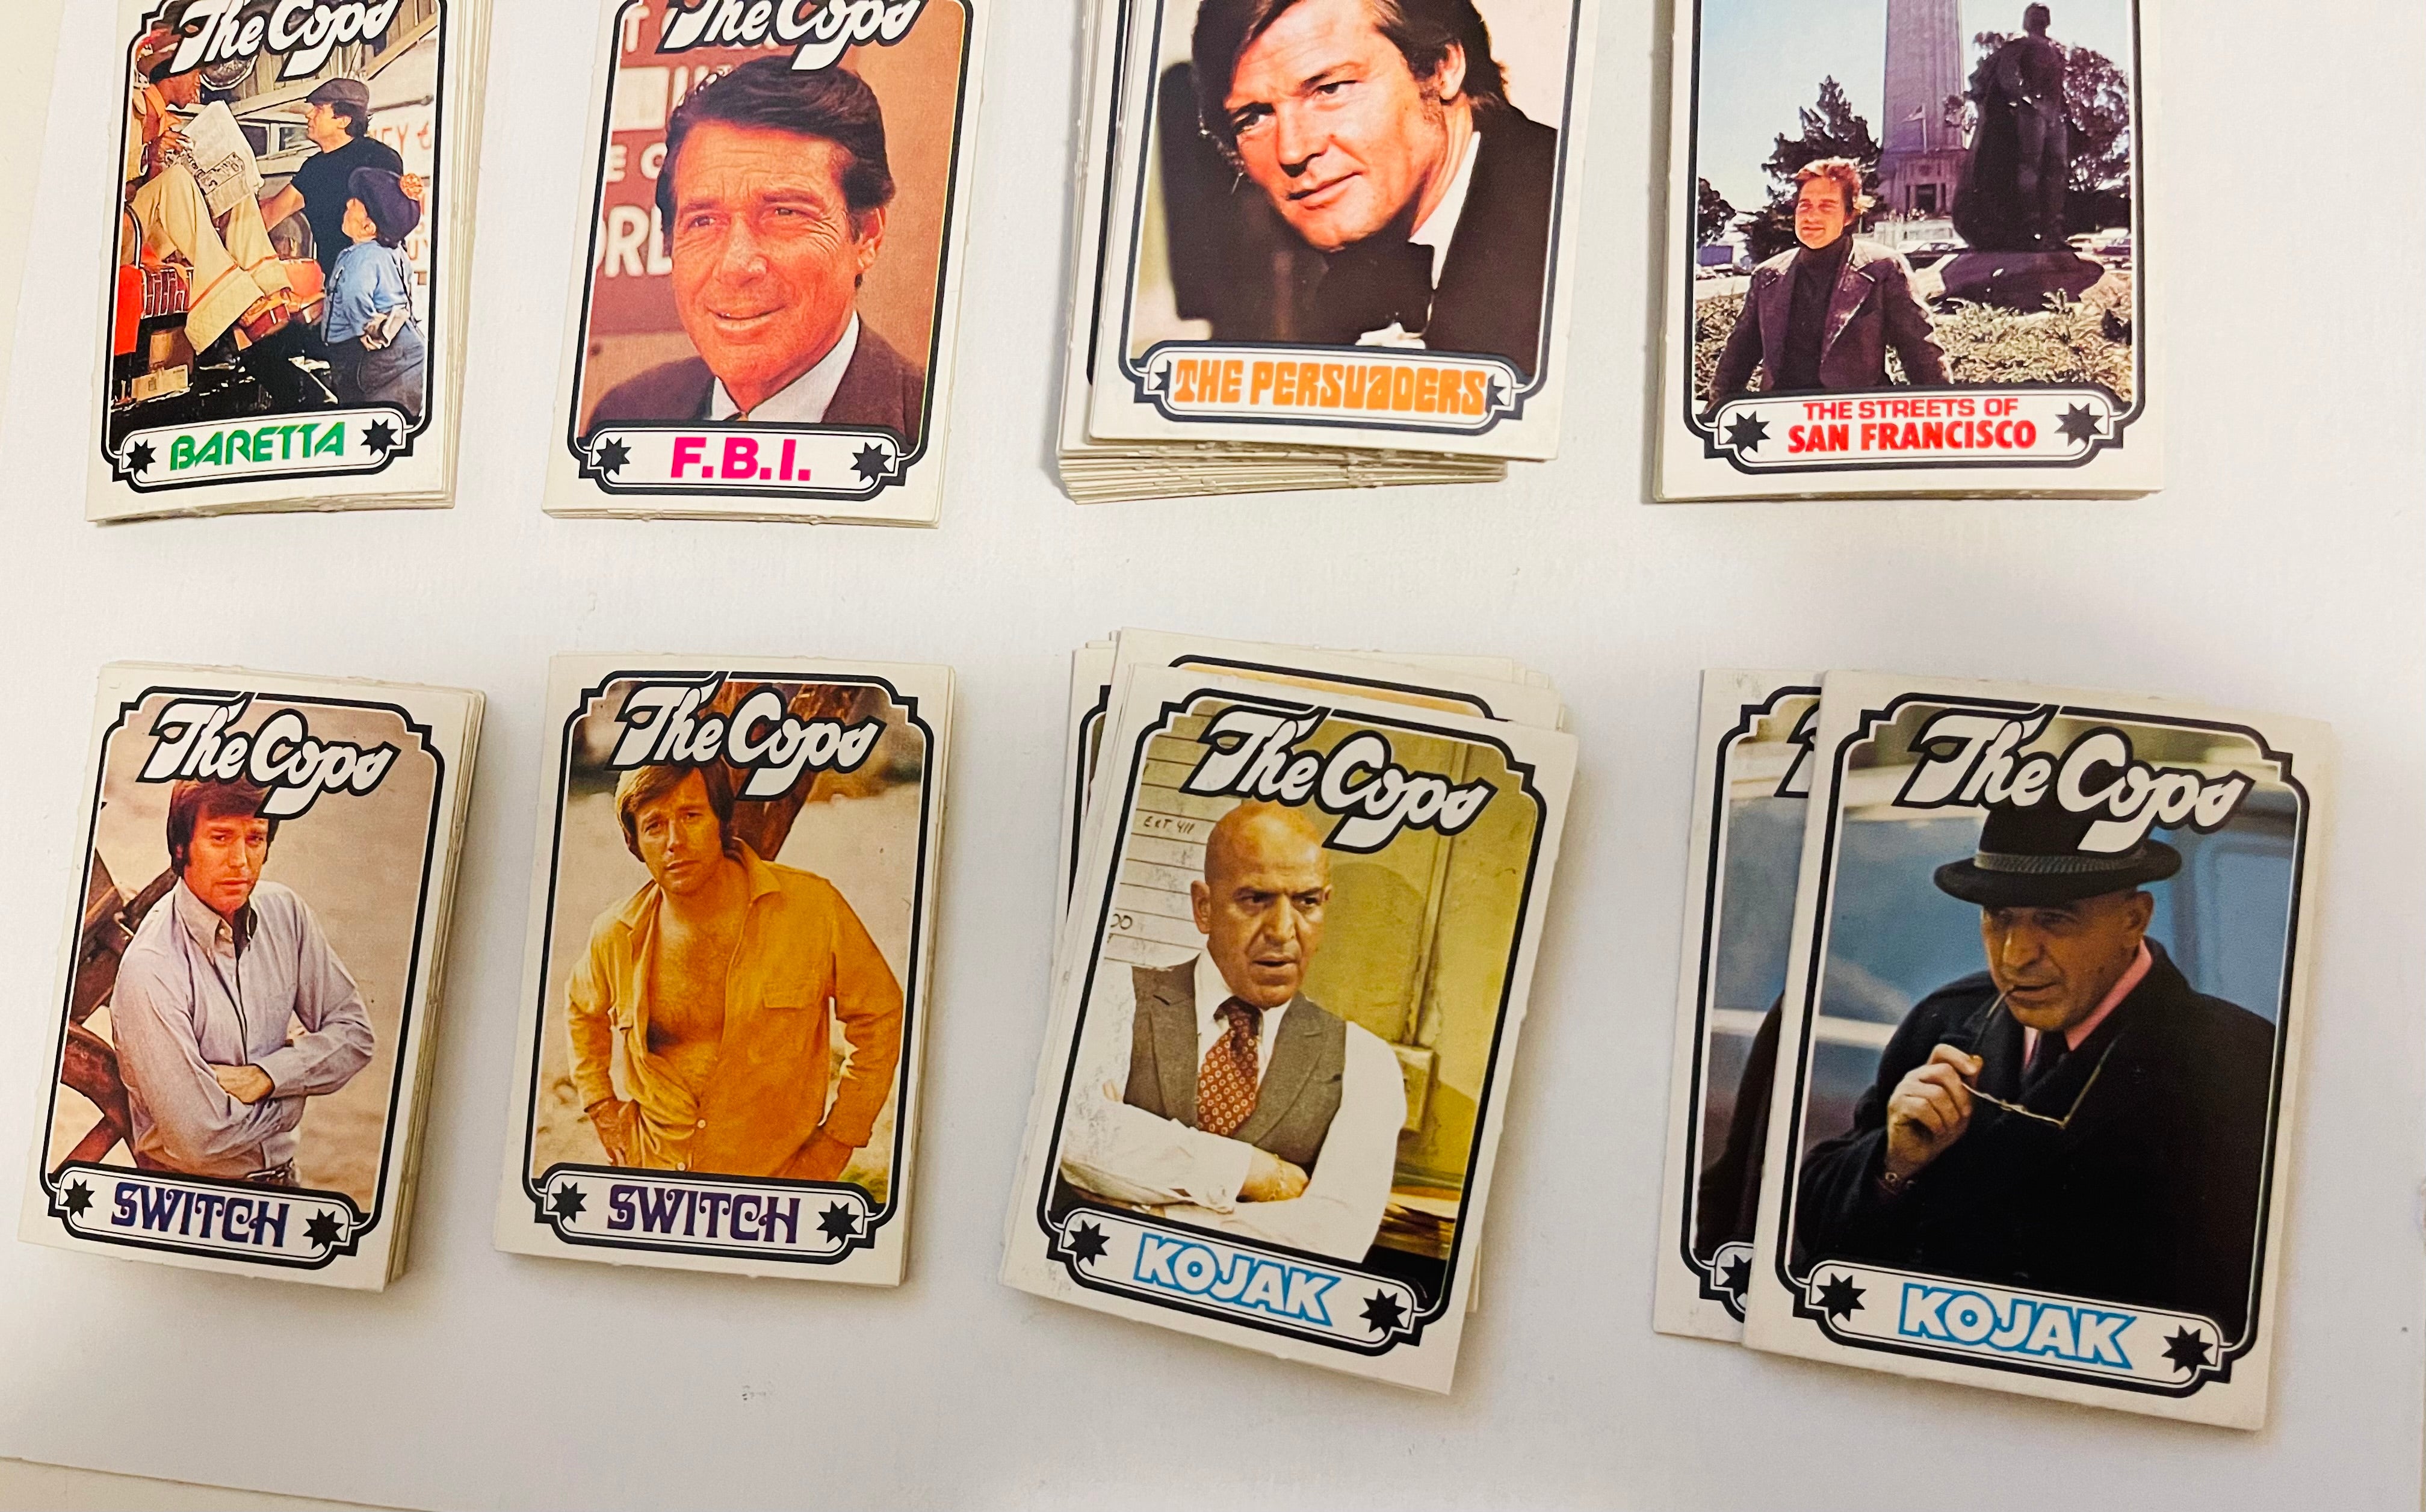 Cops TV shows rare Monty Gum cards set 1976